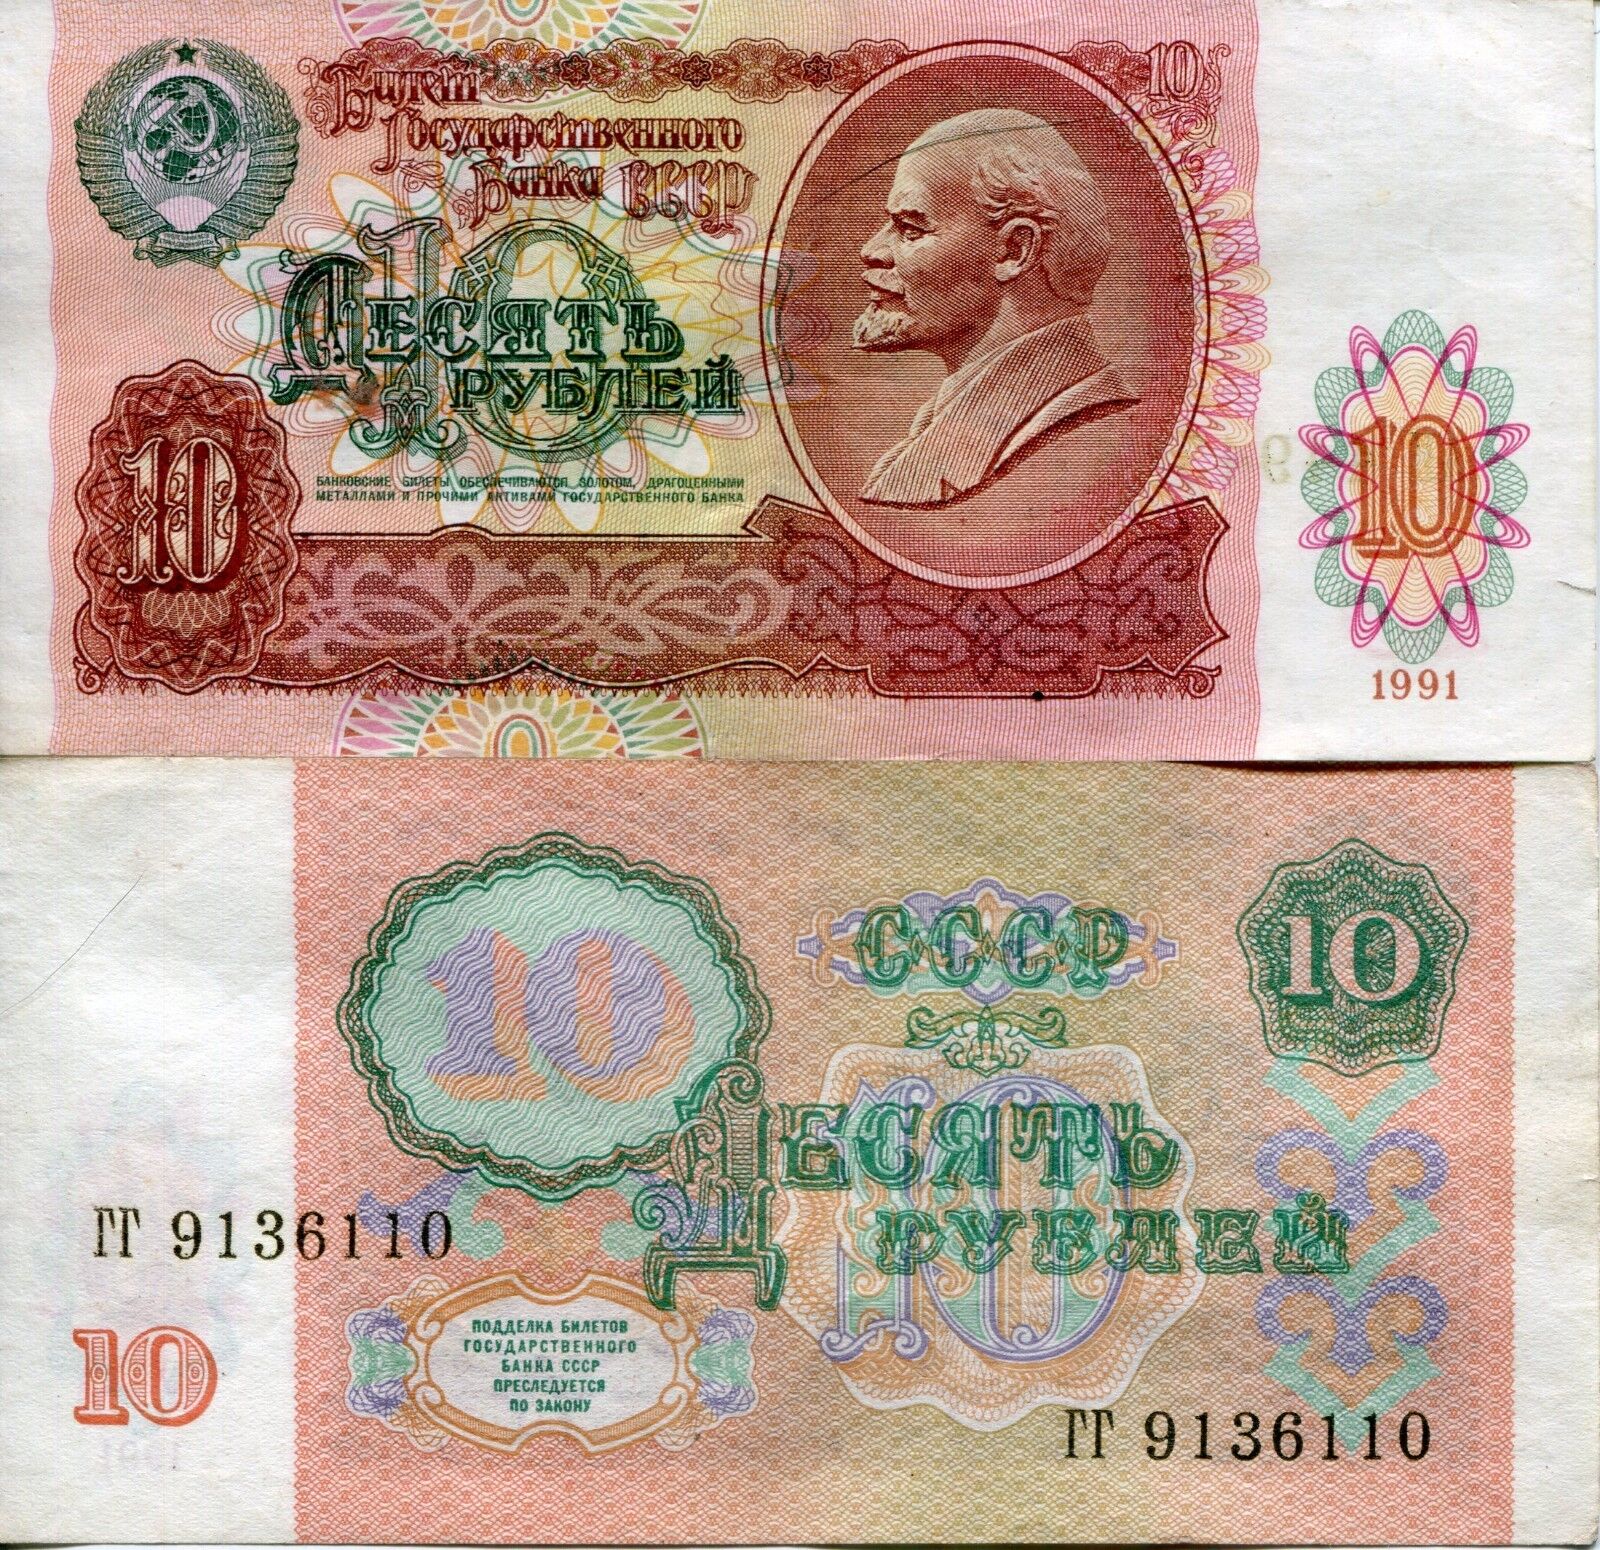 Soviet Union 1991 10 Ruble Banknote Lenin Communist Currency Рубляри Money